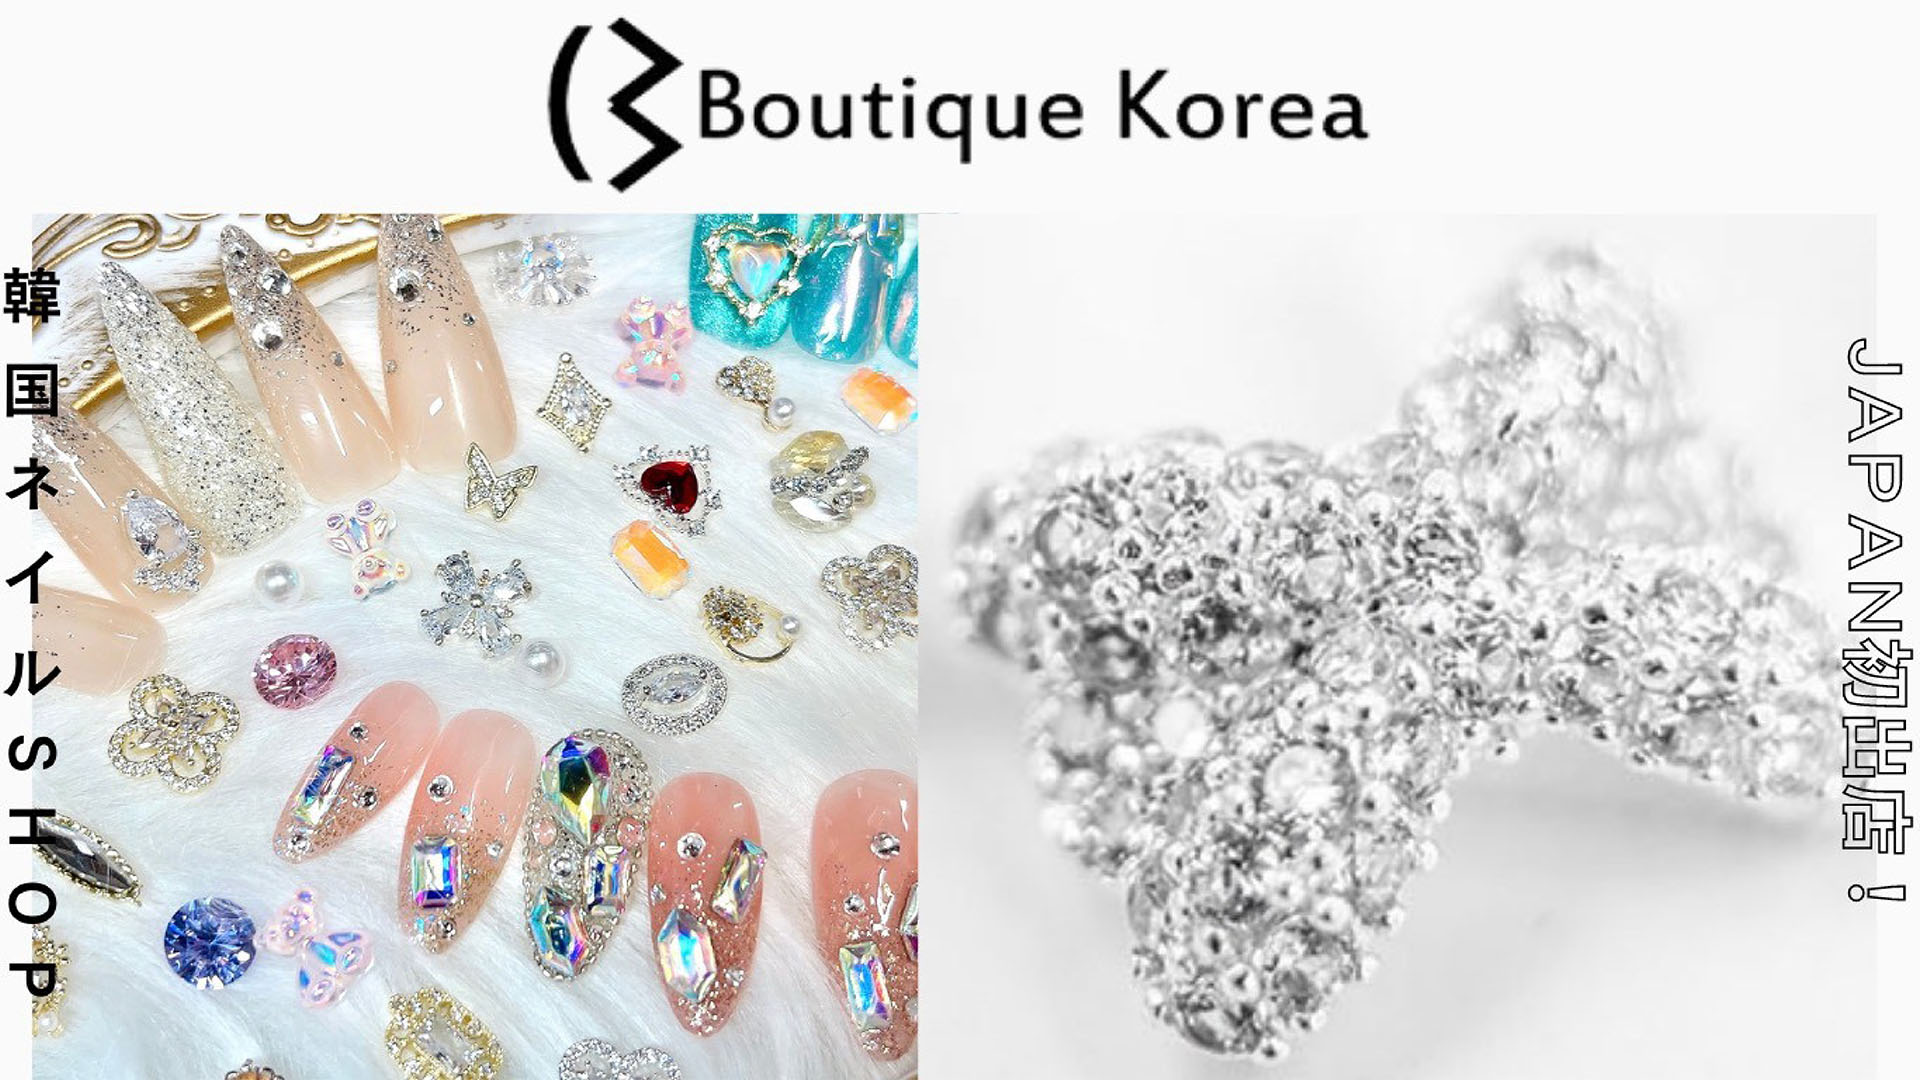 Boutique Korea